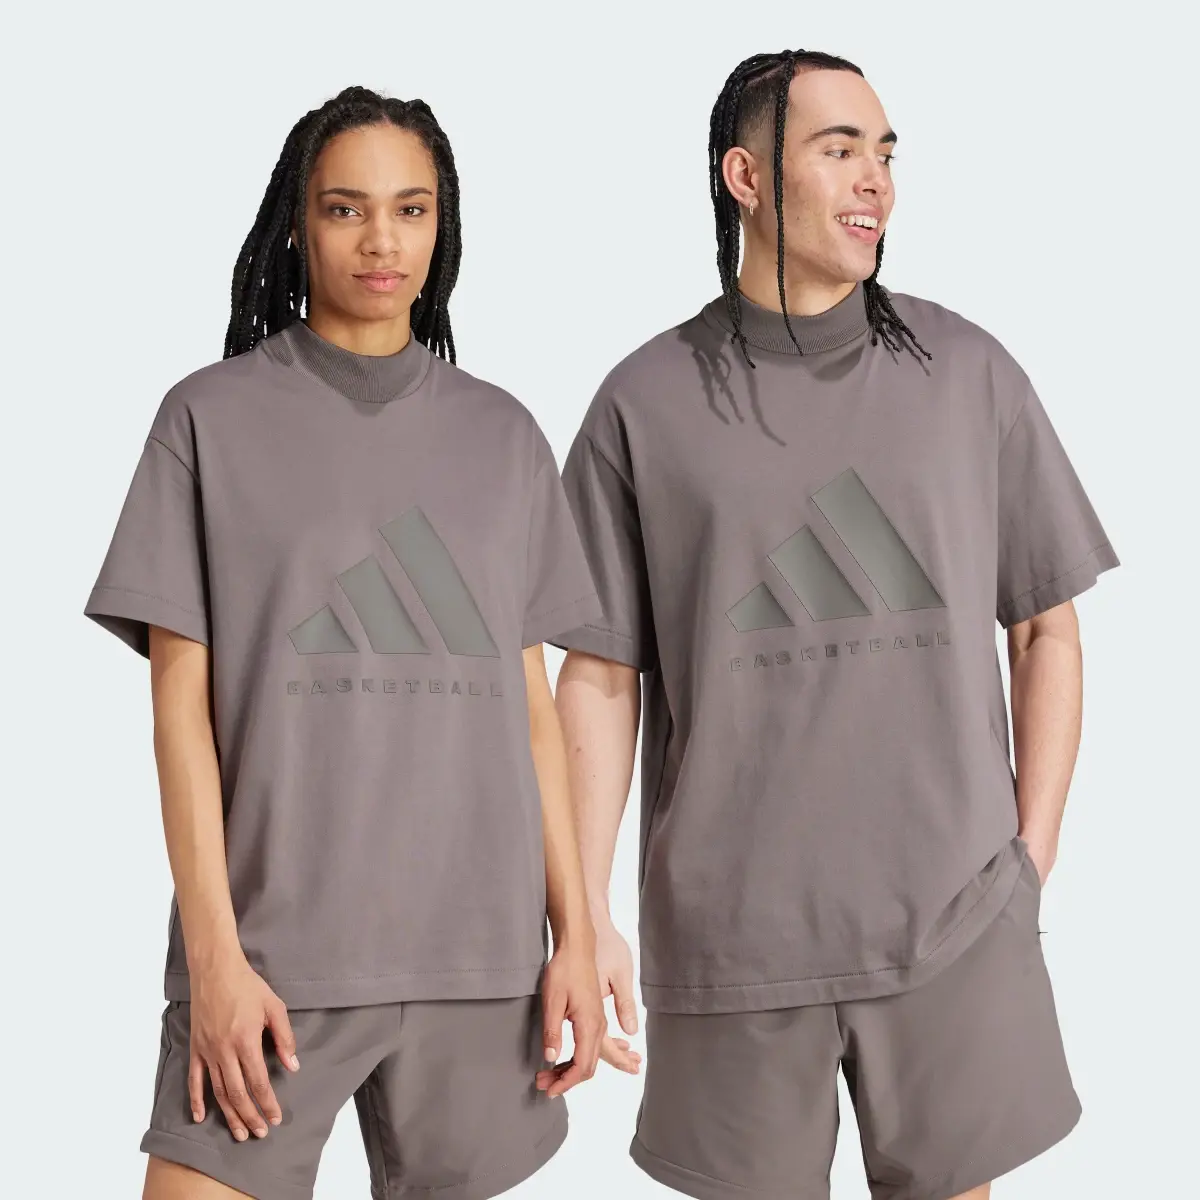 Adidas T-shirt_001 adidas Basketball. 1